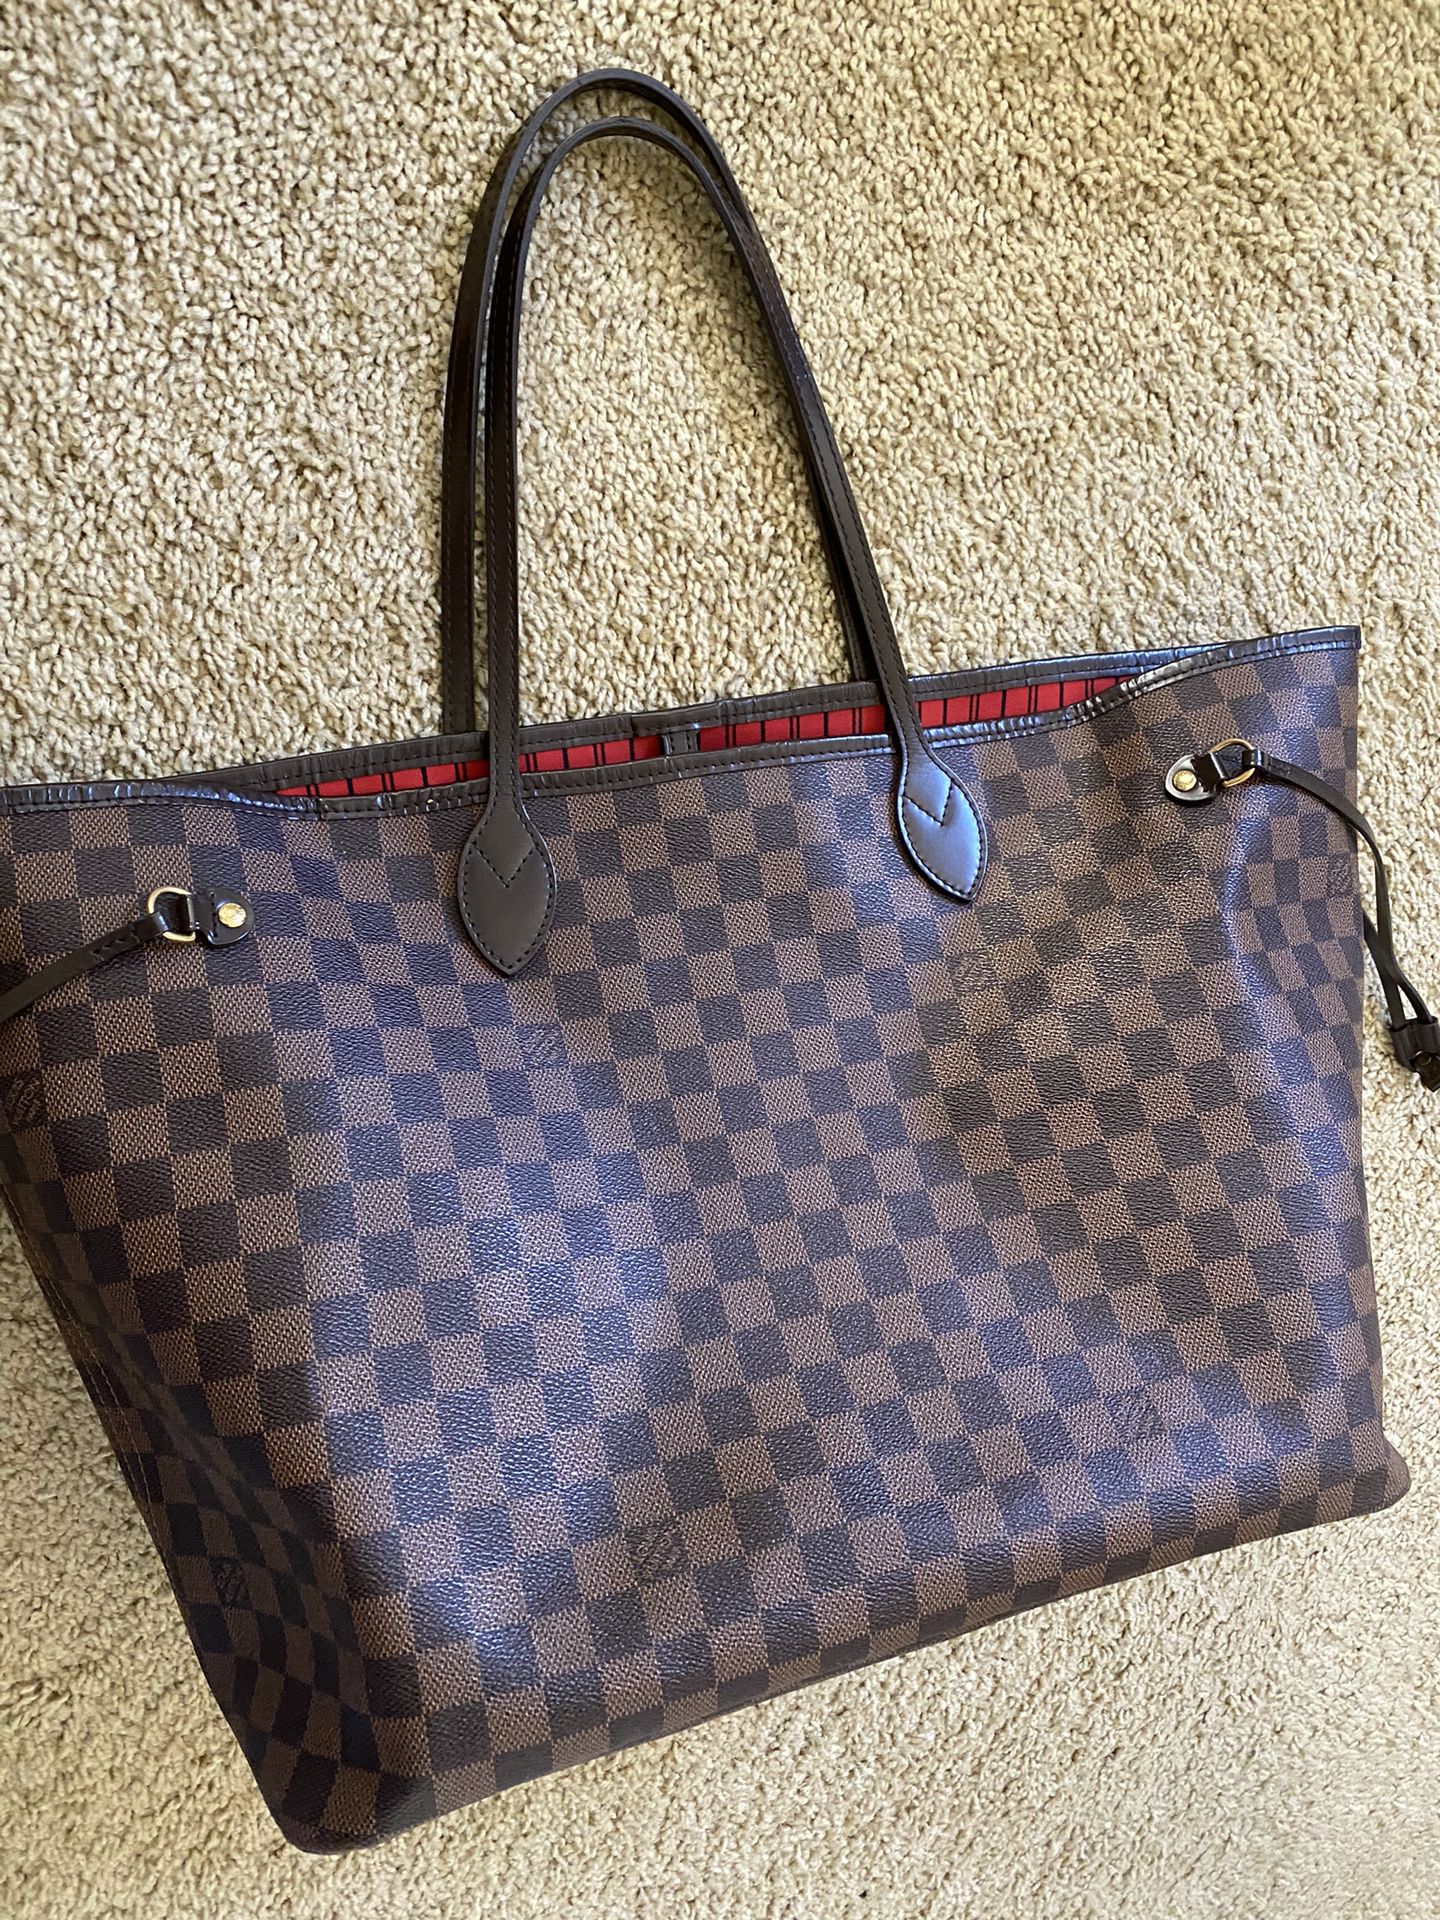 Louis Vuitton Bag #61930-1 for Sale in Mesa, AZ - OfferUp